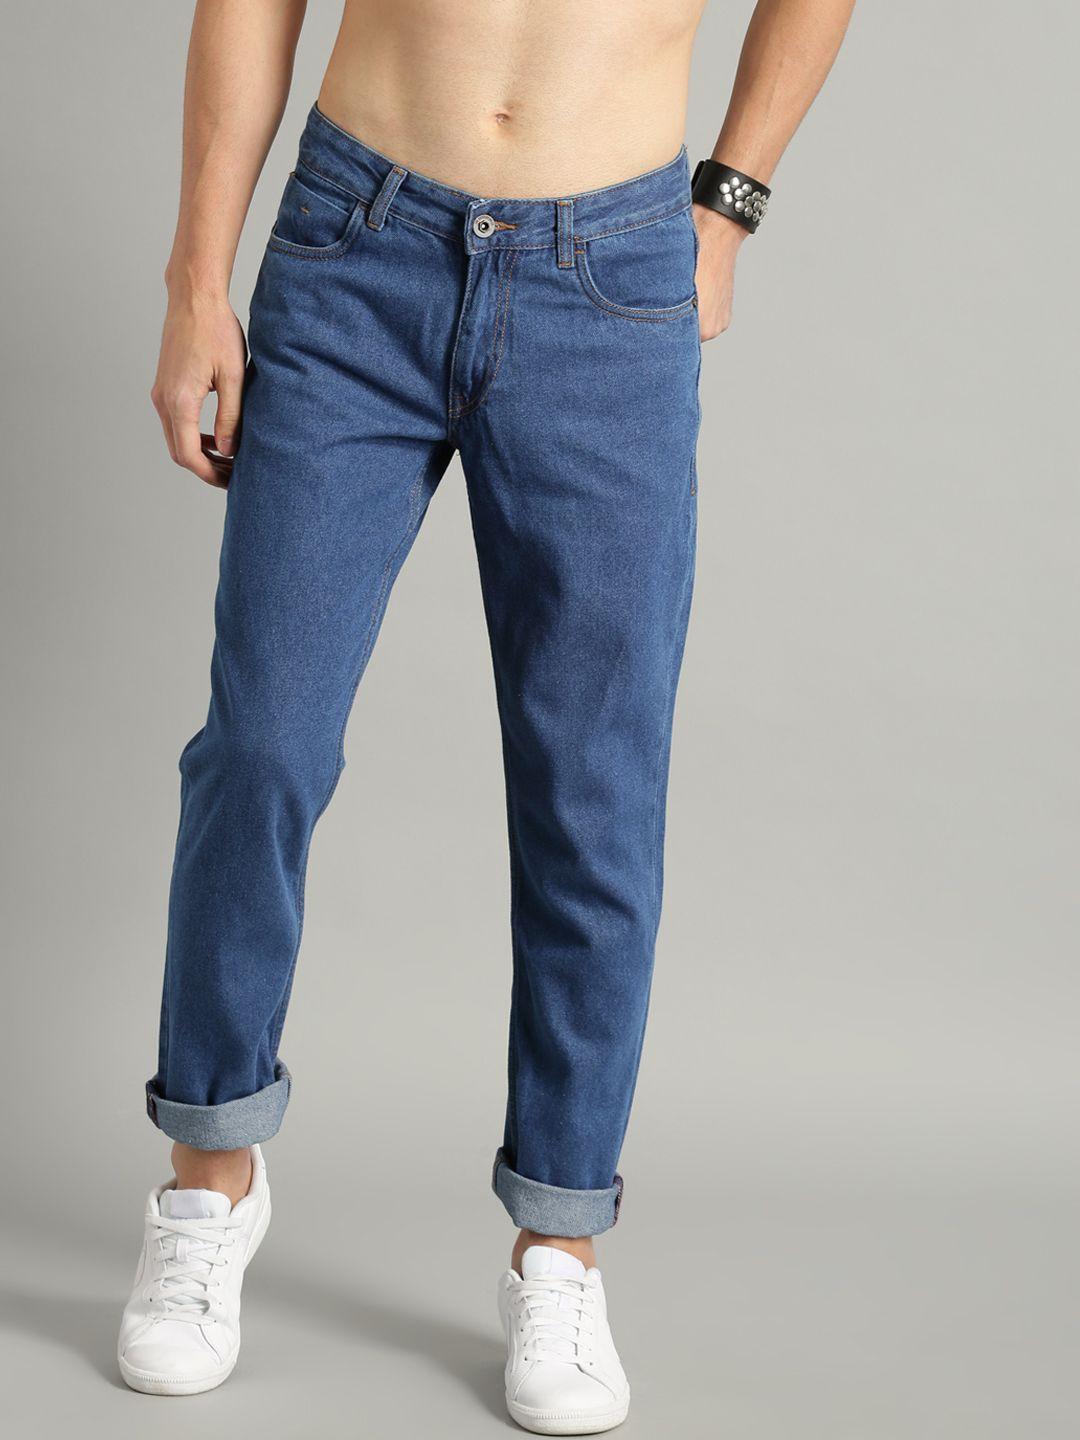 roadster-men-blue-slim-fit-mid-rise-clean-look-jeans